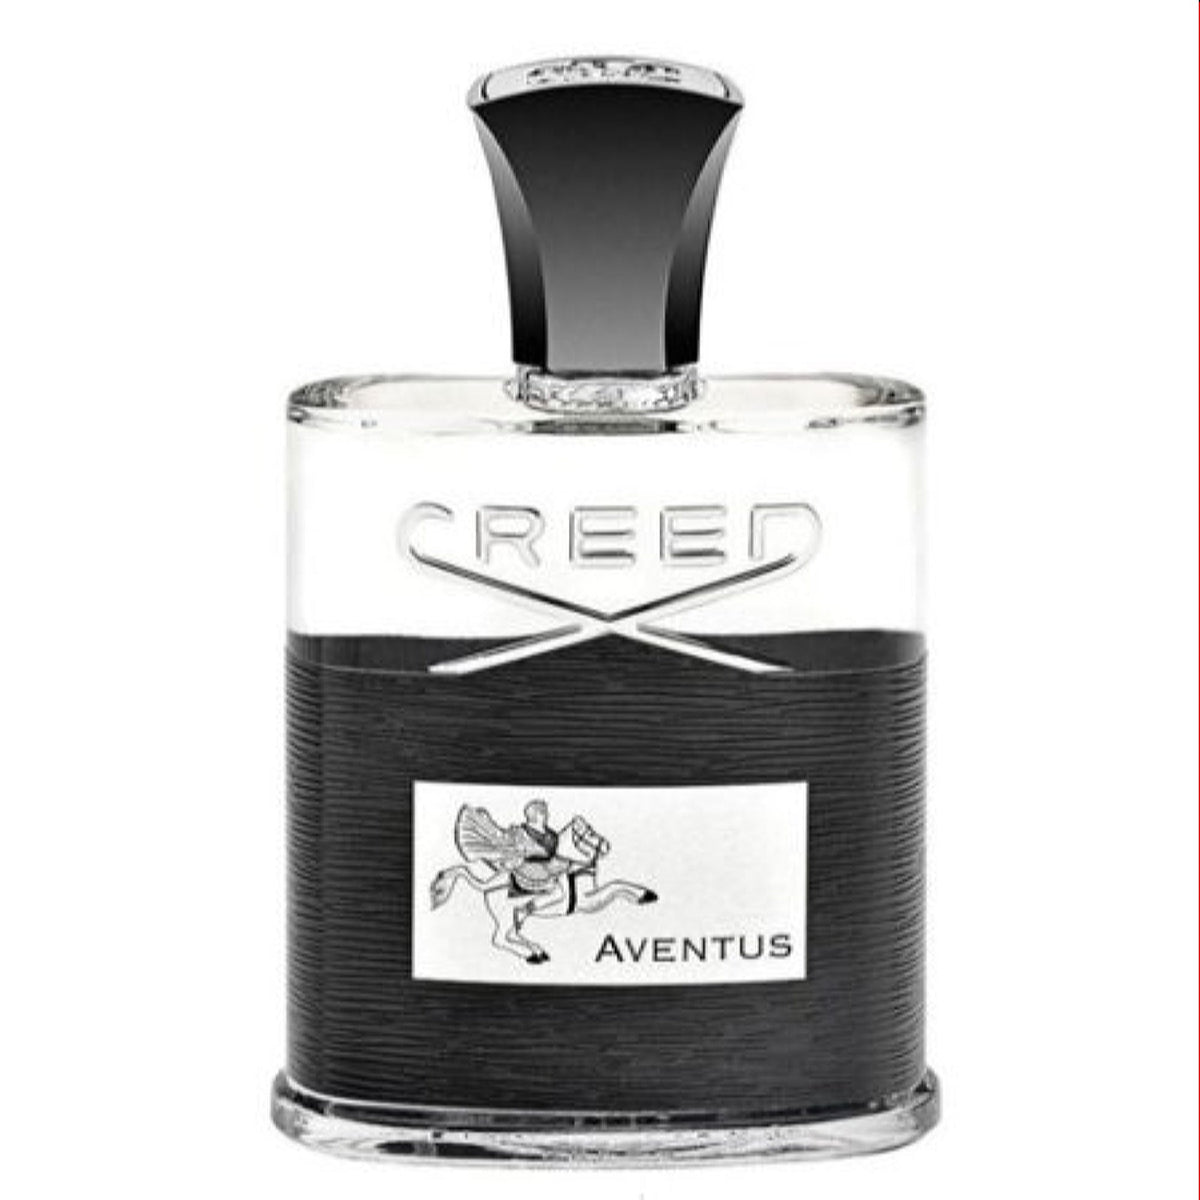 Creed Aventus Creed Edp Spray Slightly 3.3 Oz (100 Ml) For Men  